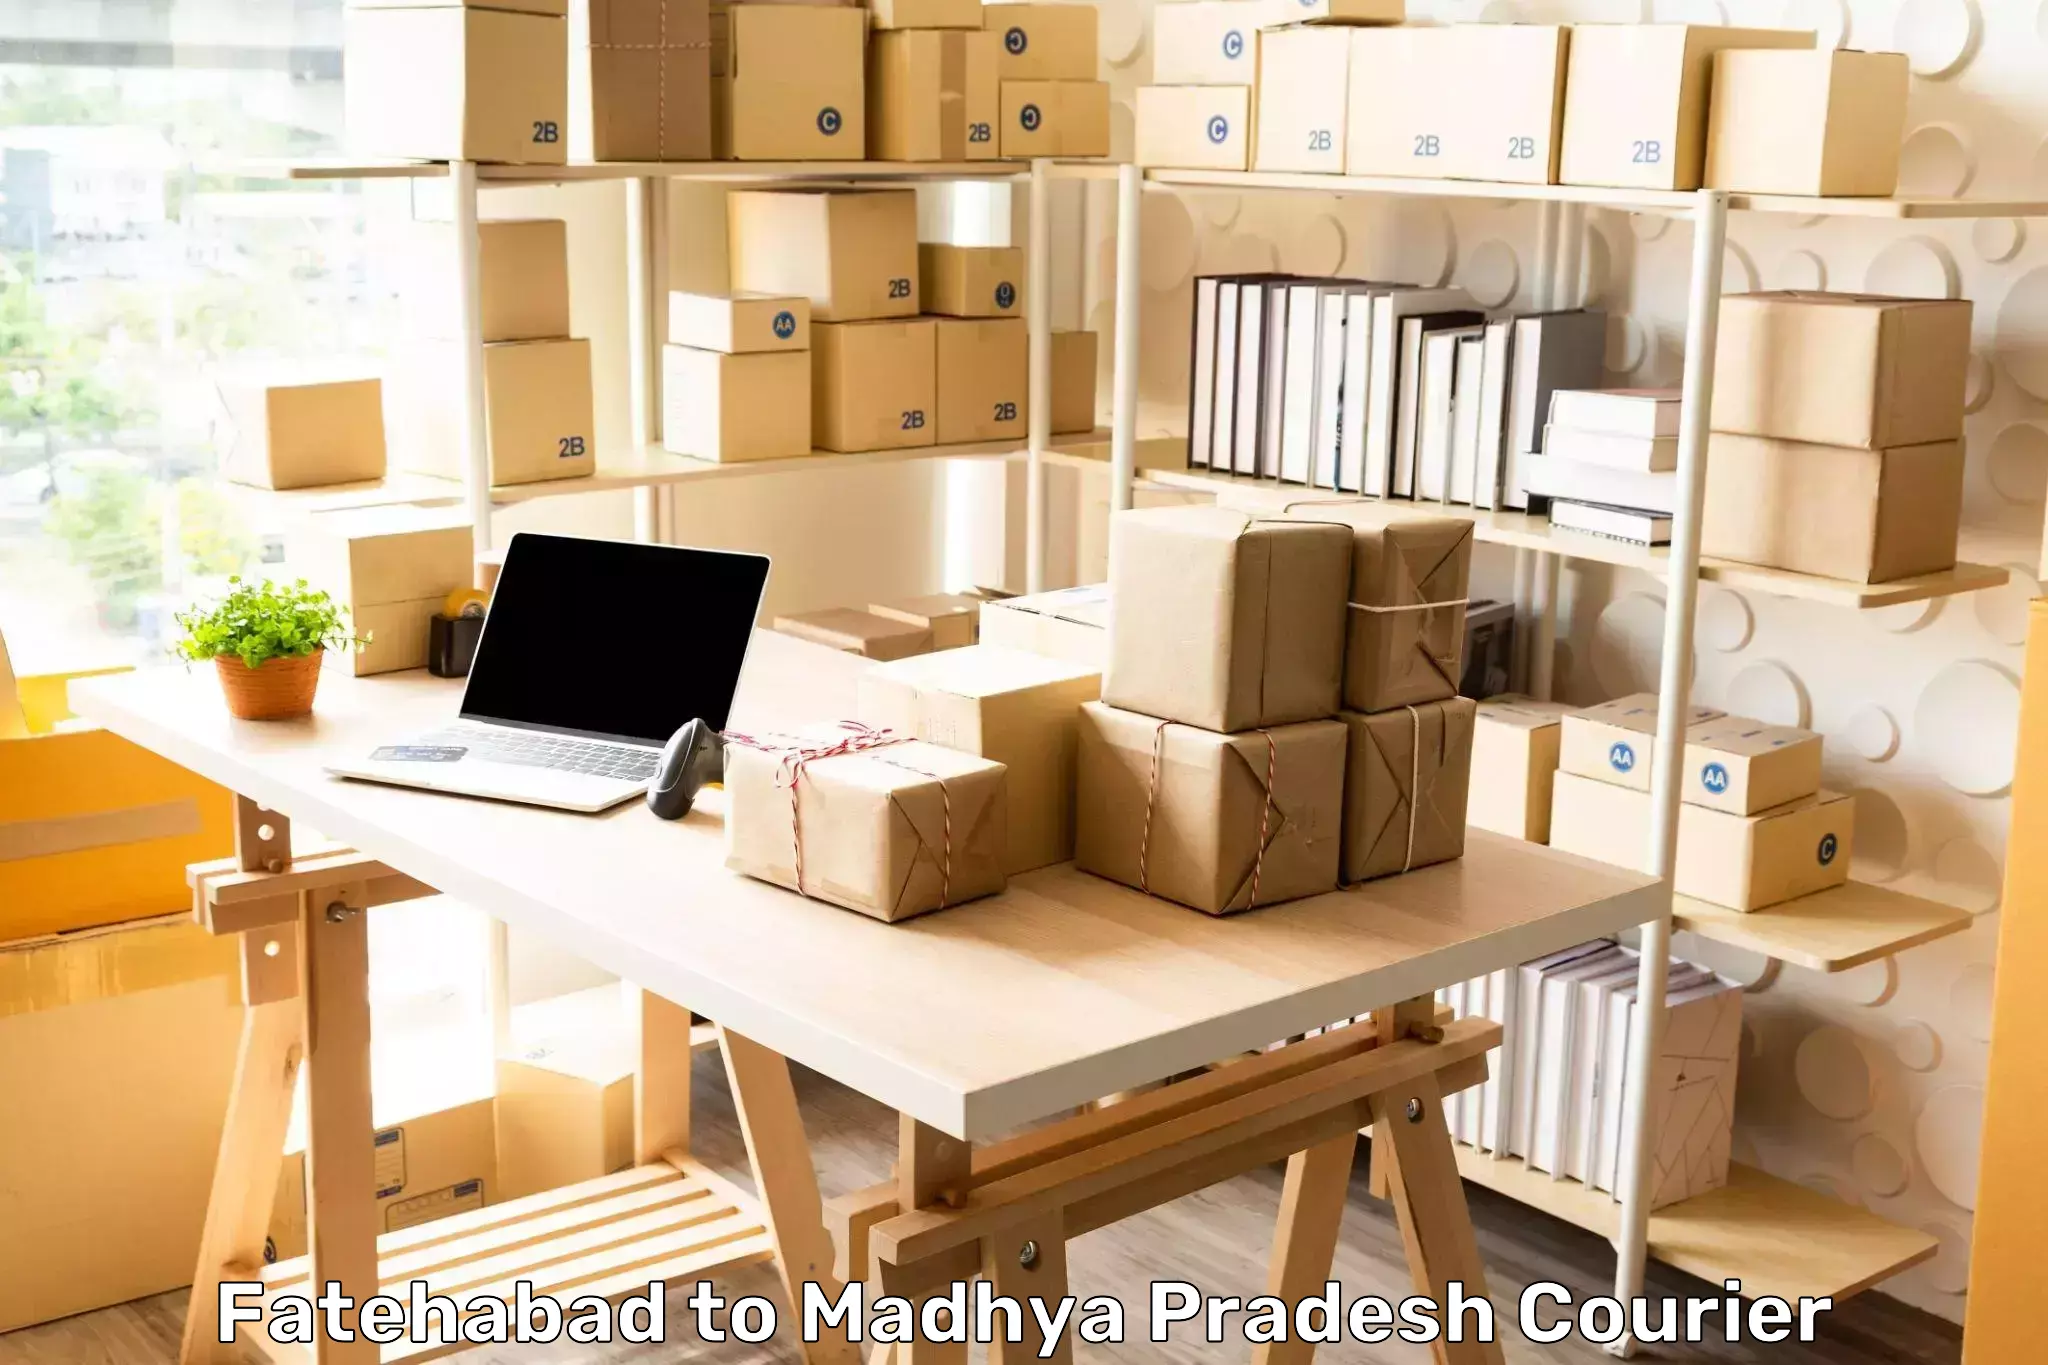 Express delivery capabilities Fatehabad to Madhya Pradesh